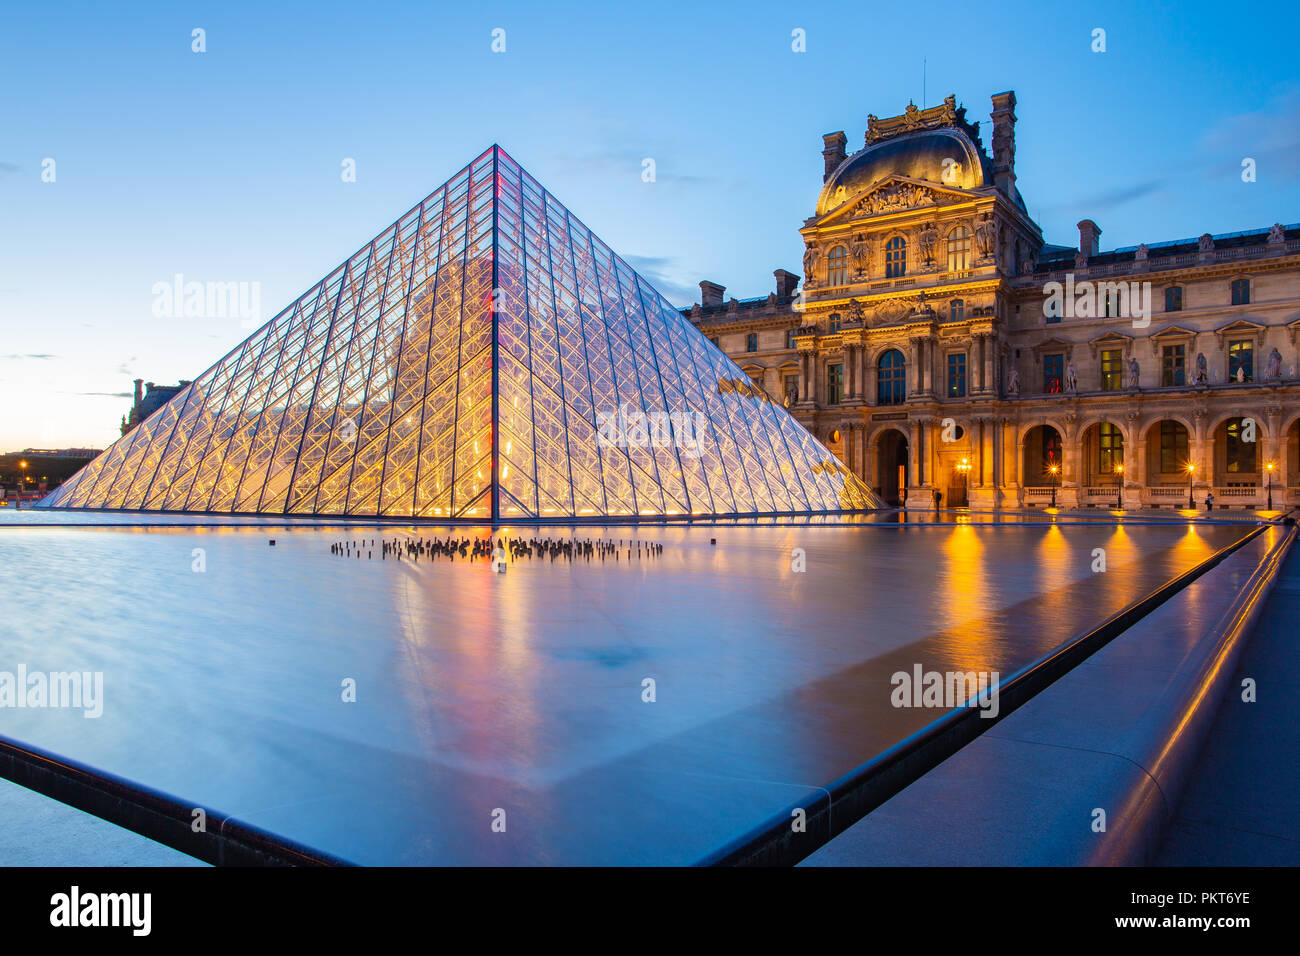 Paris, France - May 13, 2014: Louvre Museum at night landmark in Paris city, France. Stock Photo